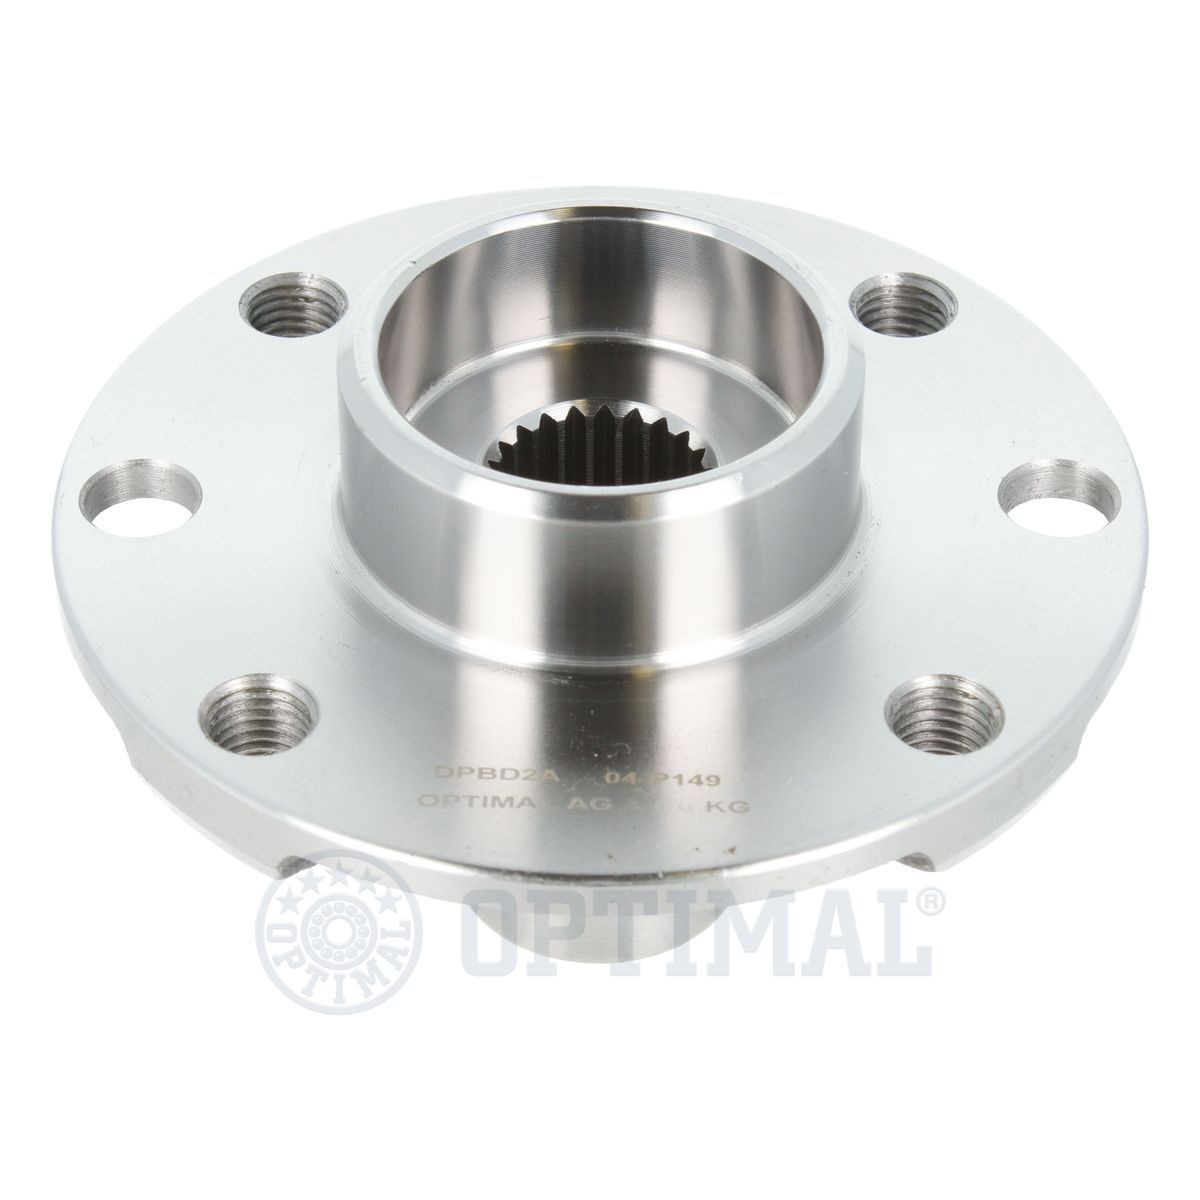 OPTIMAL Wheel Hub 04-P149